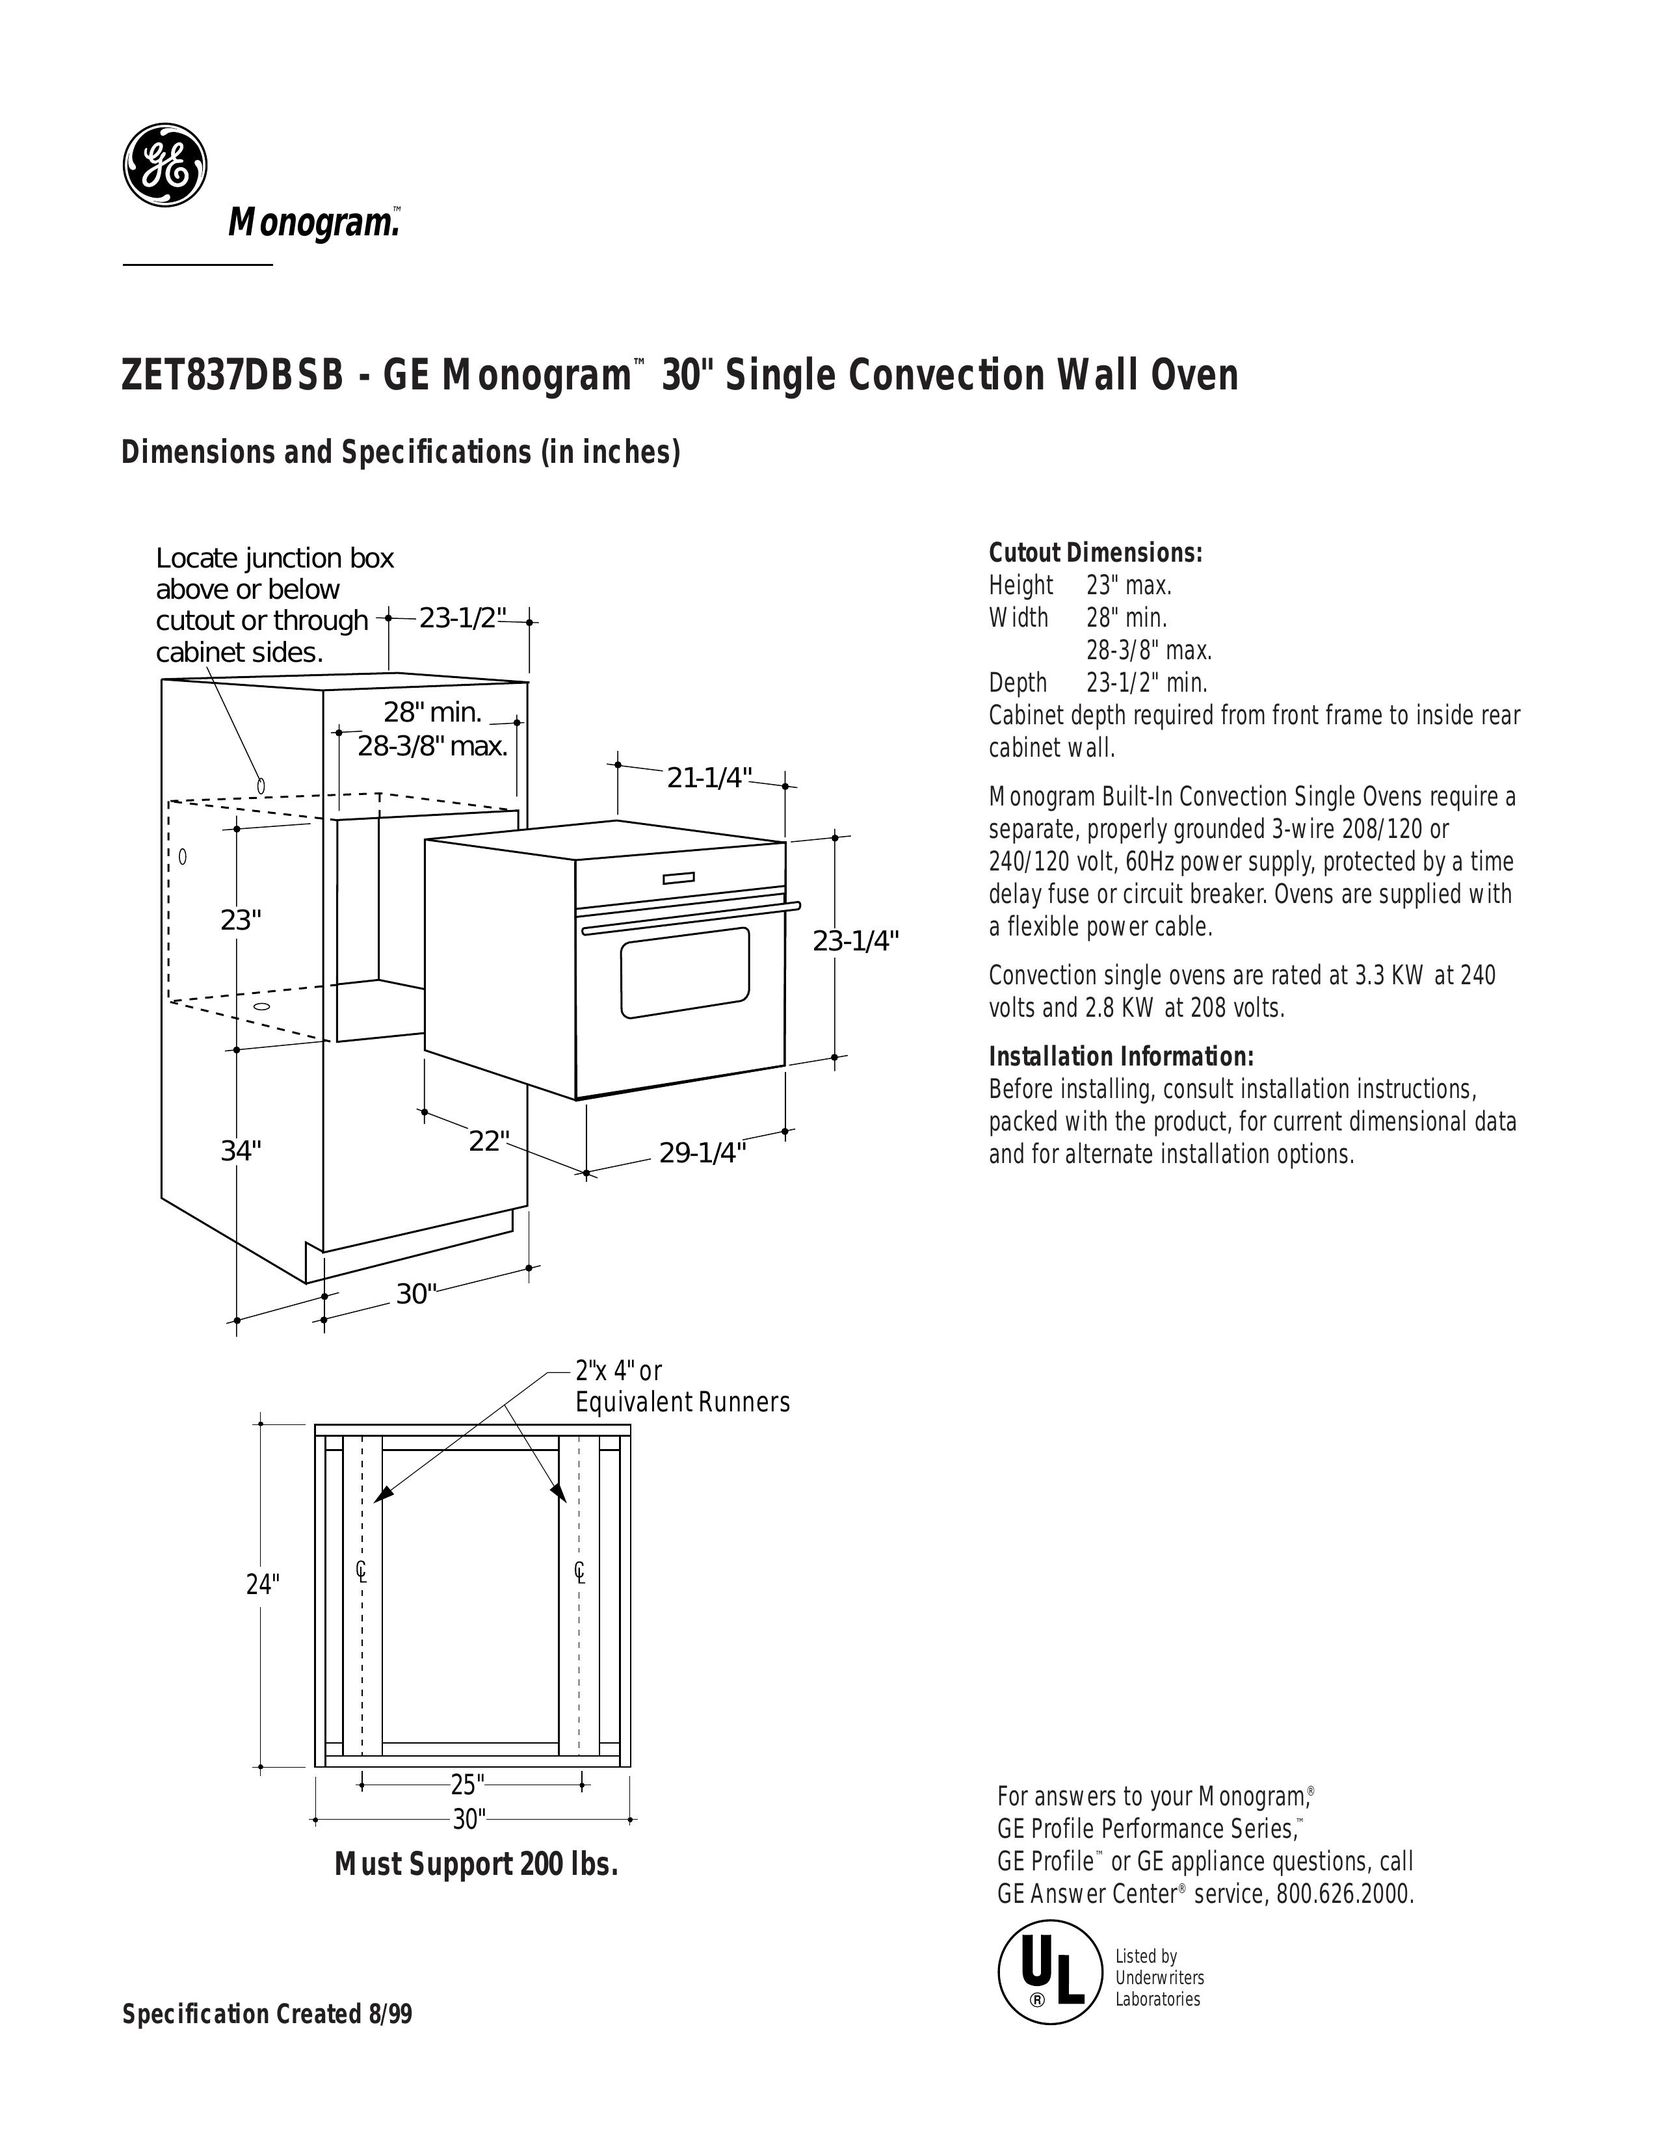 GE Monogram ZET837DBSB Convection Oven User Manual